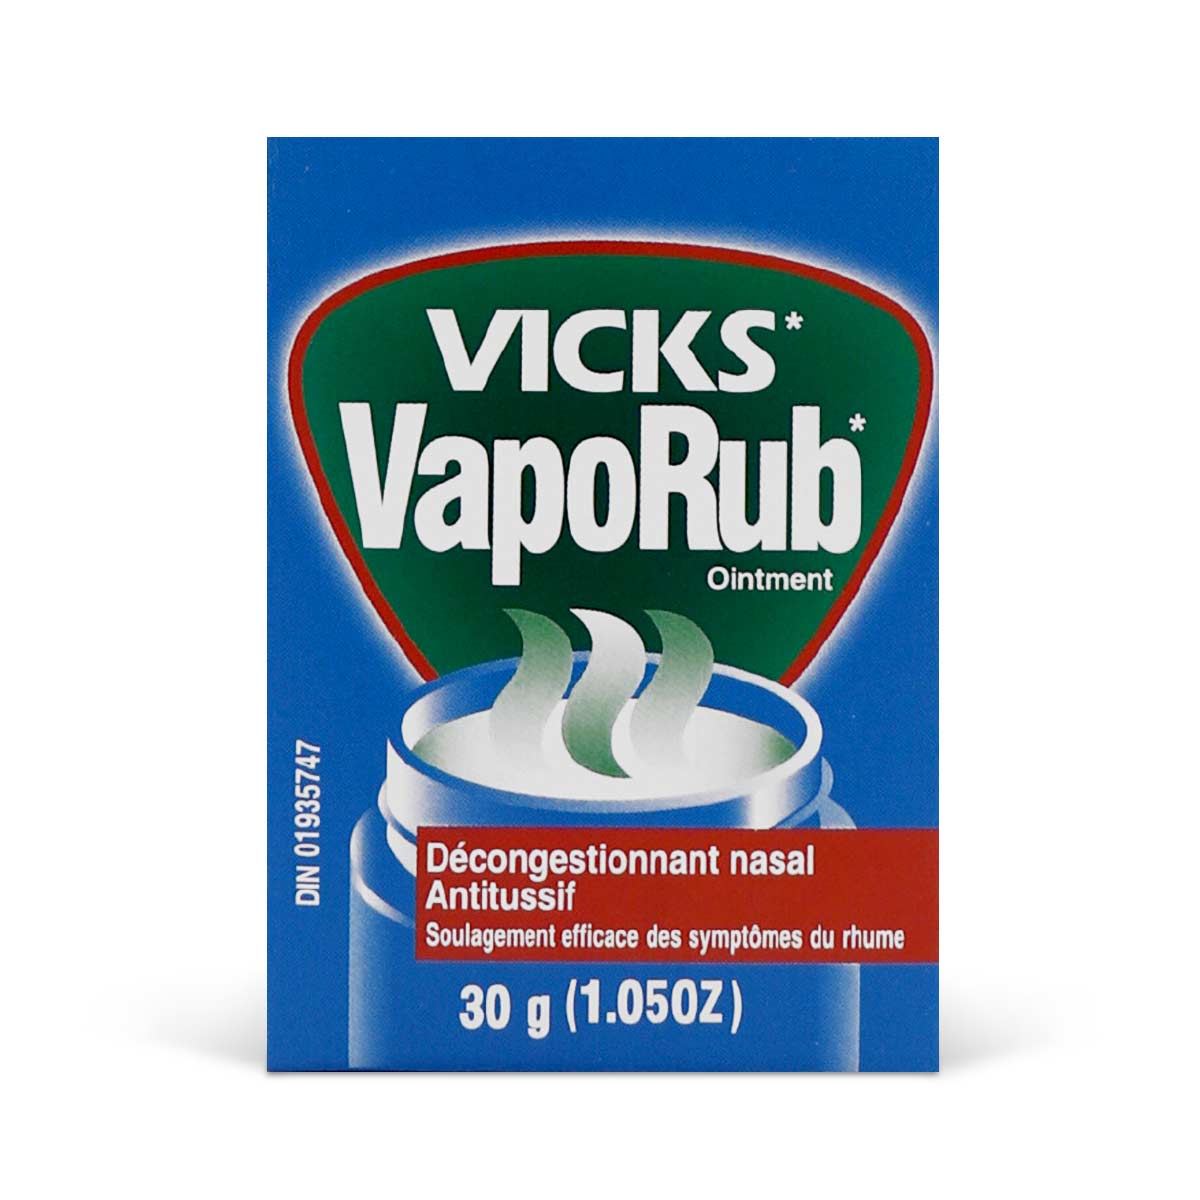 Vicks Vapor Rub Ointment